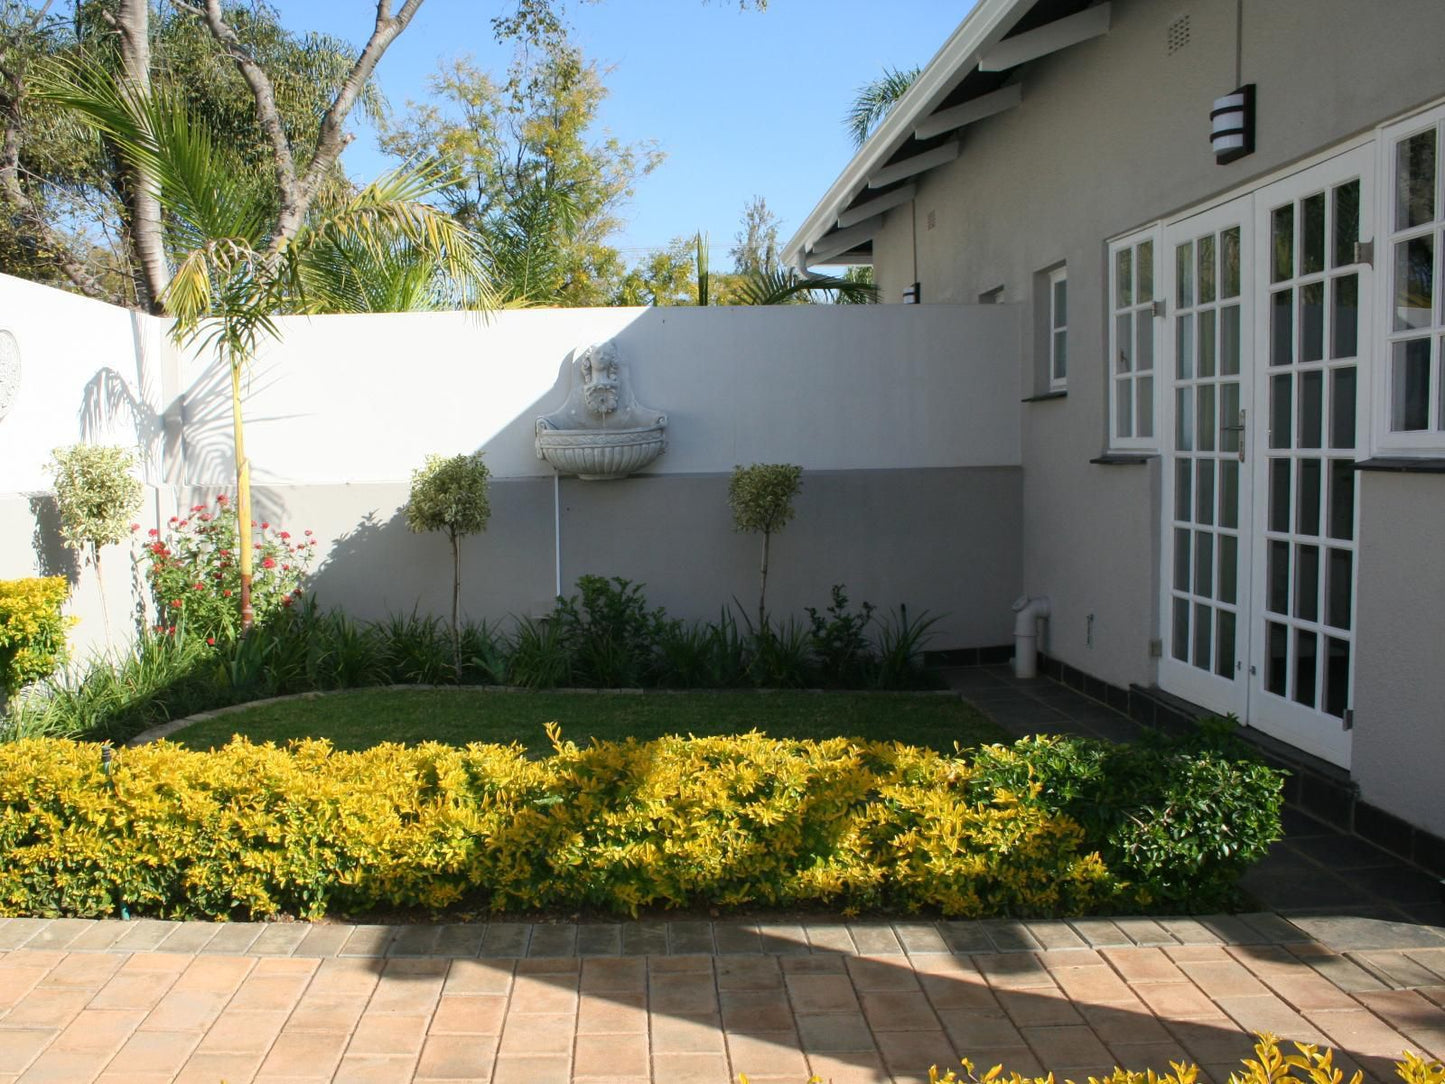 Touch Of Class Villas Baileys Muckleneuk Pretoria Tshwane Gauteng South Africa House, Building, Architecture, Palm Tree, Plant, Nature, Wood, Garden